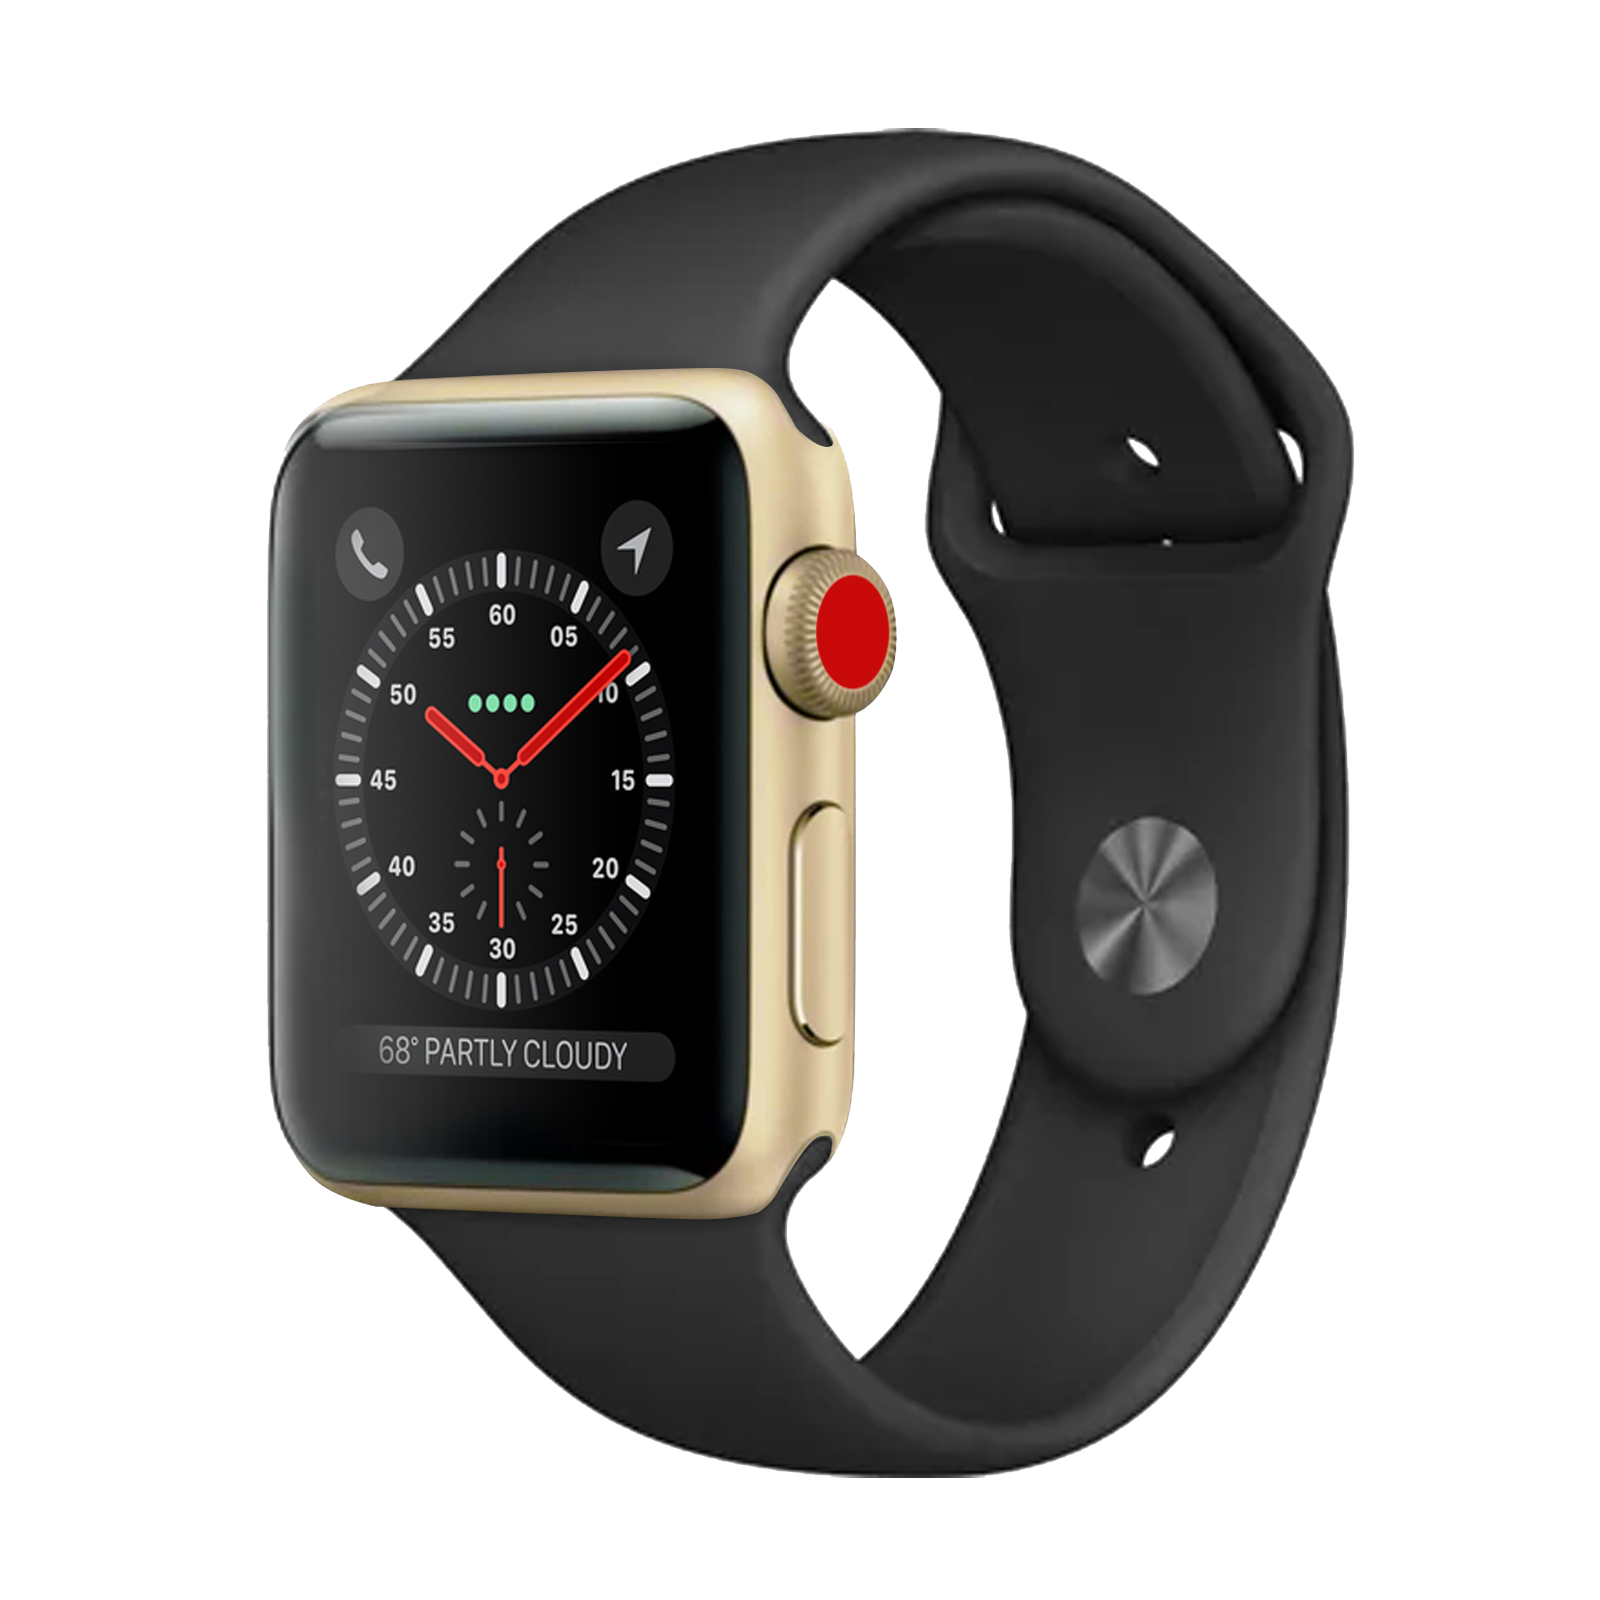 Apple Watch Series 3 Sport 38mm Gold Good Cellular - Unlocked